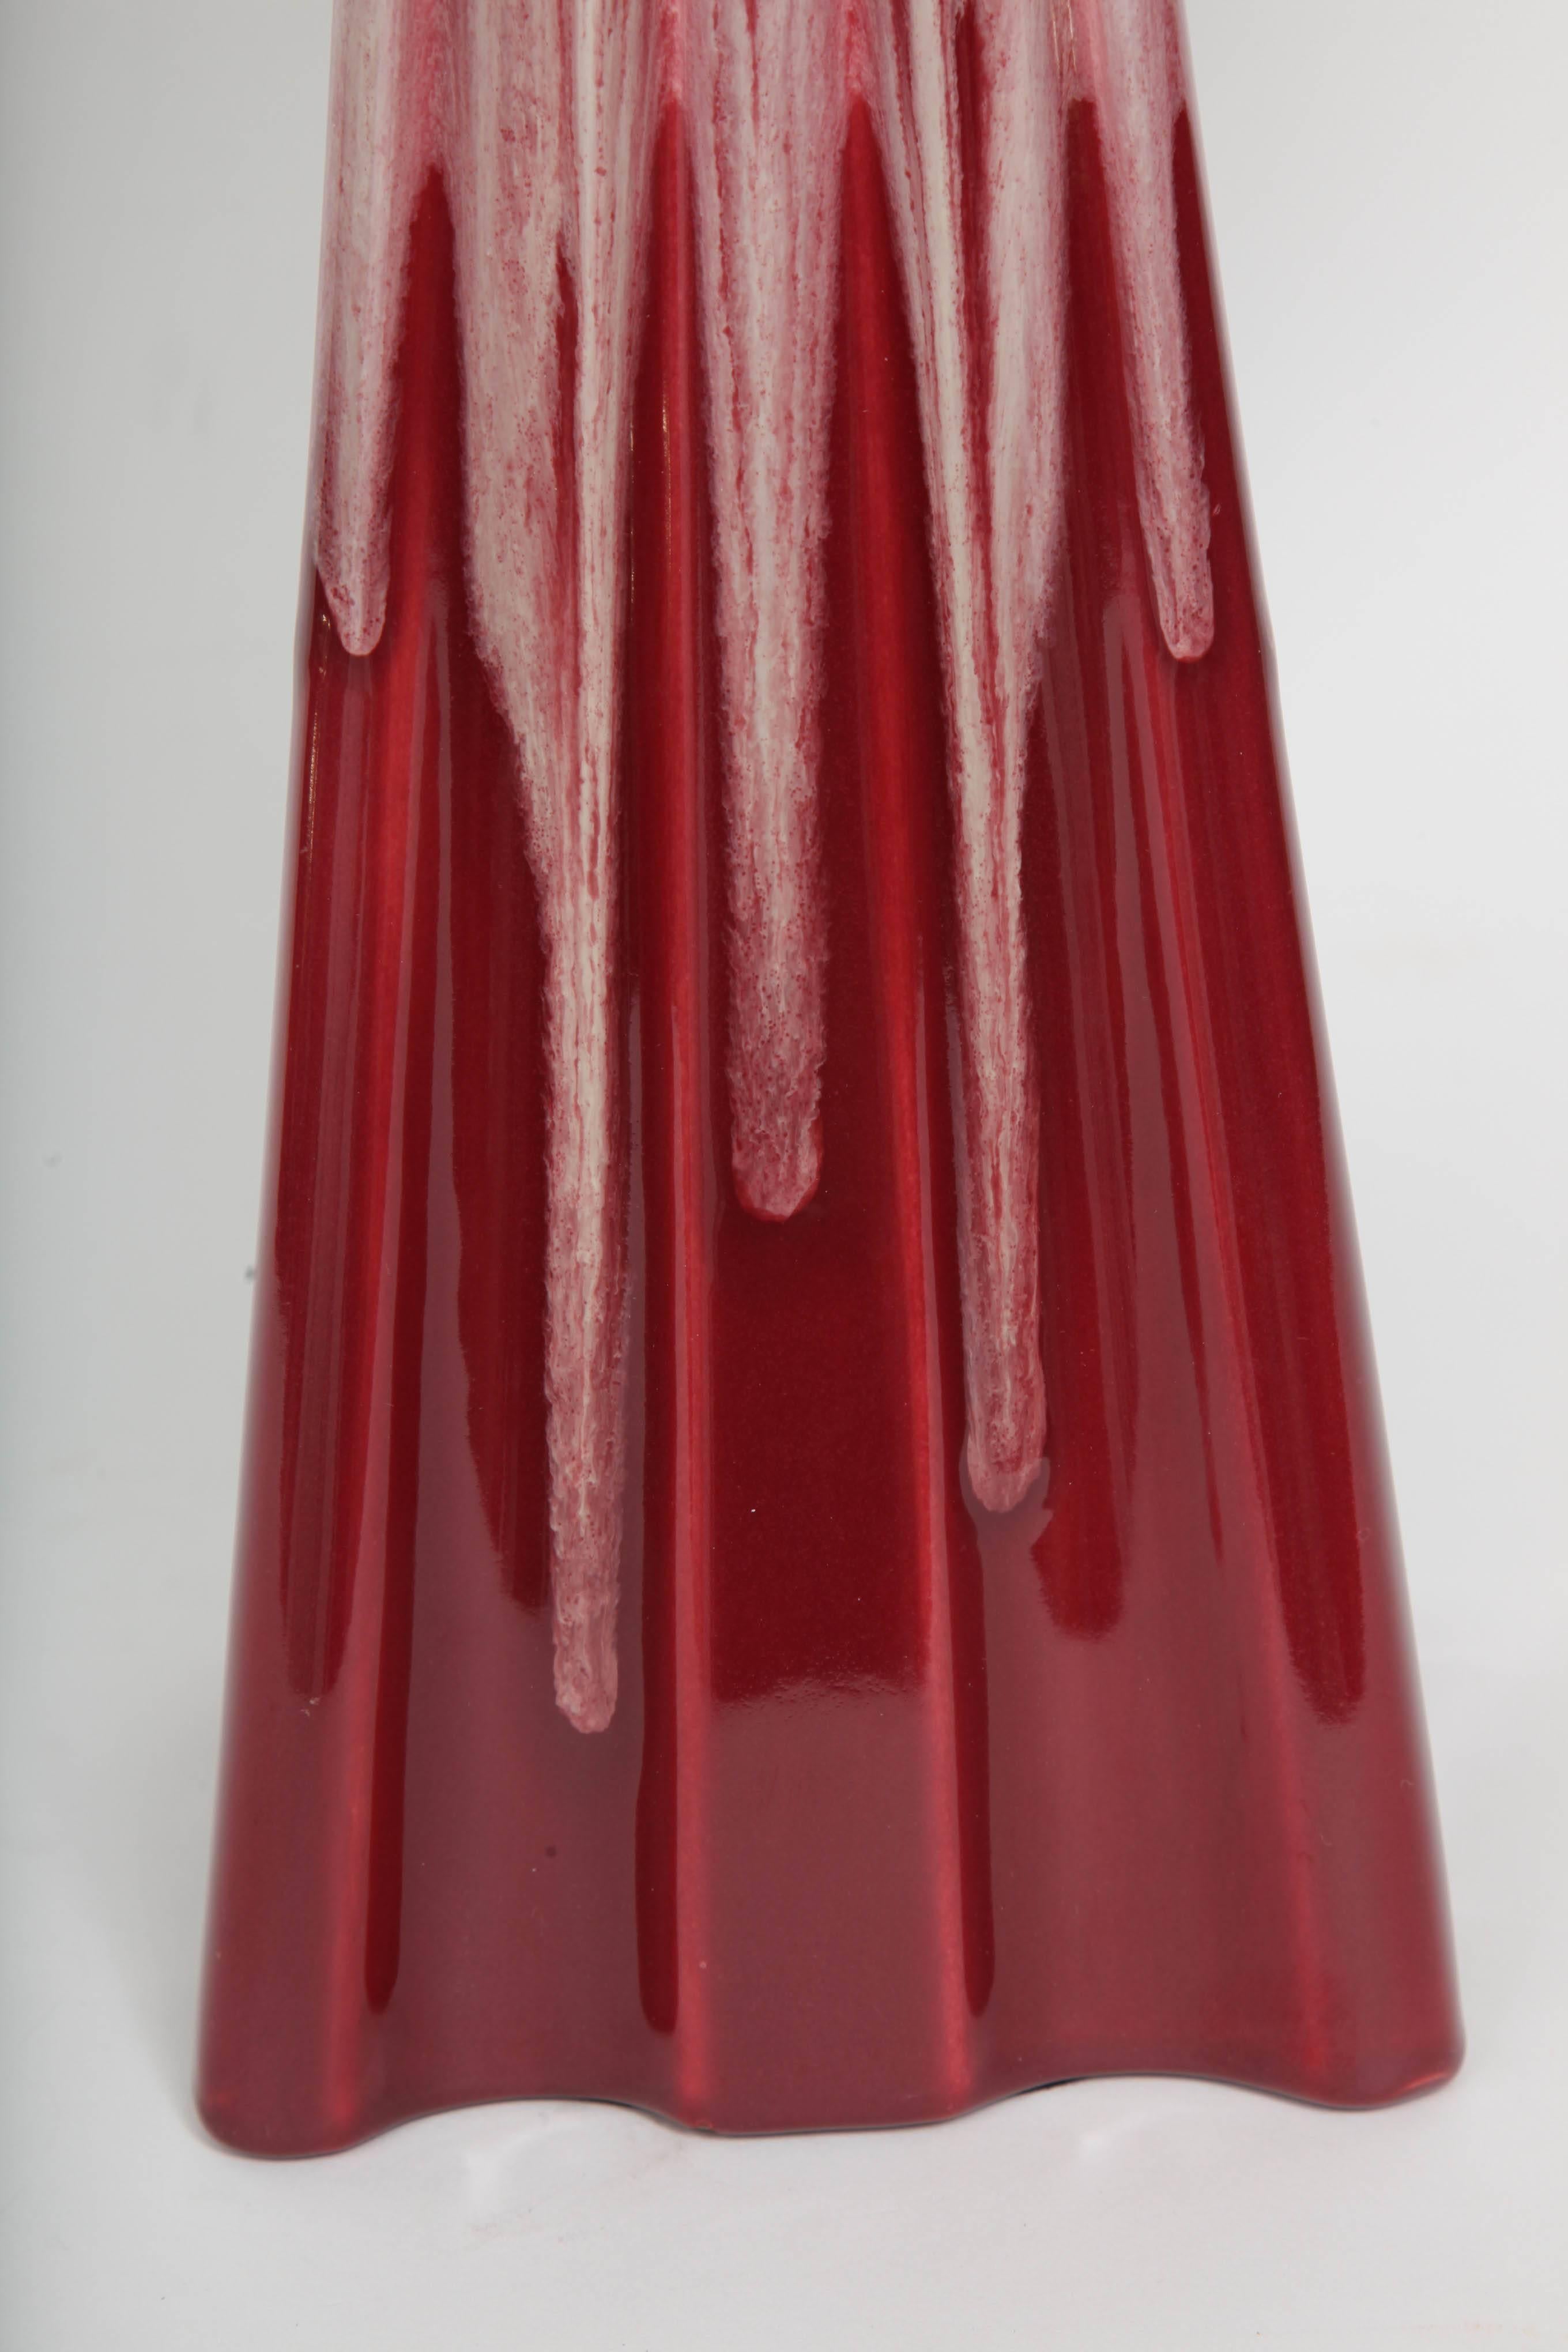 Art Deco 1940s Cranberry Glazed Ceramic Lamps